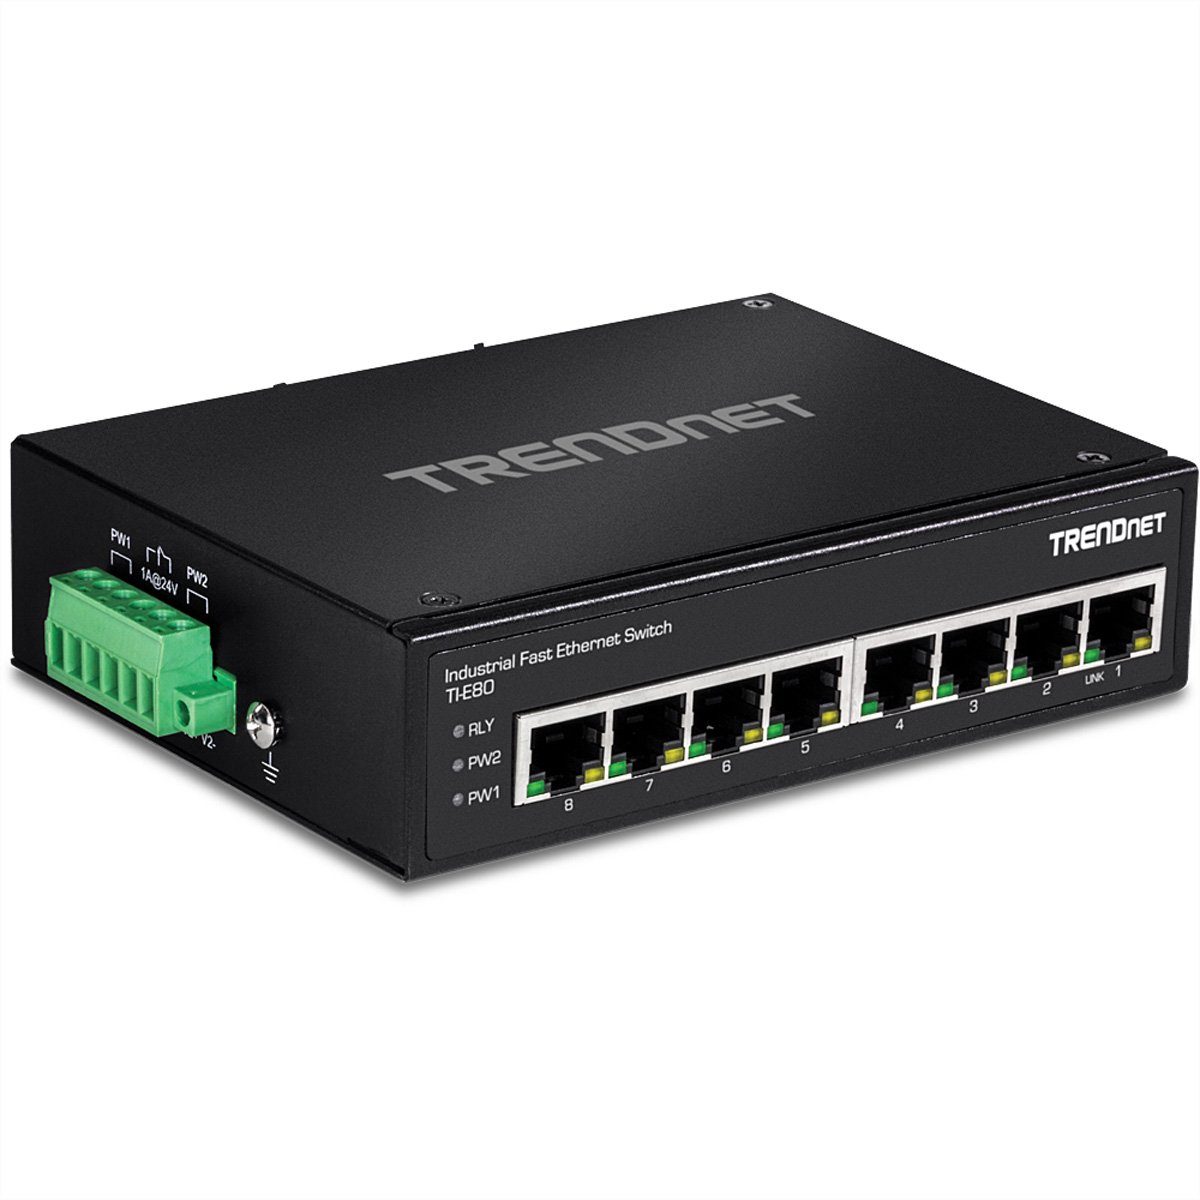 Netzwerk-Switch TI-E80 Industrial Trendnet Ethernet DIN-Rail Fast 8-Port Switch